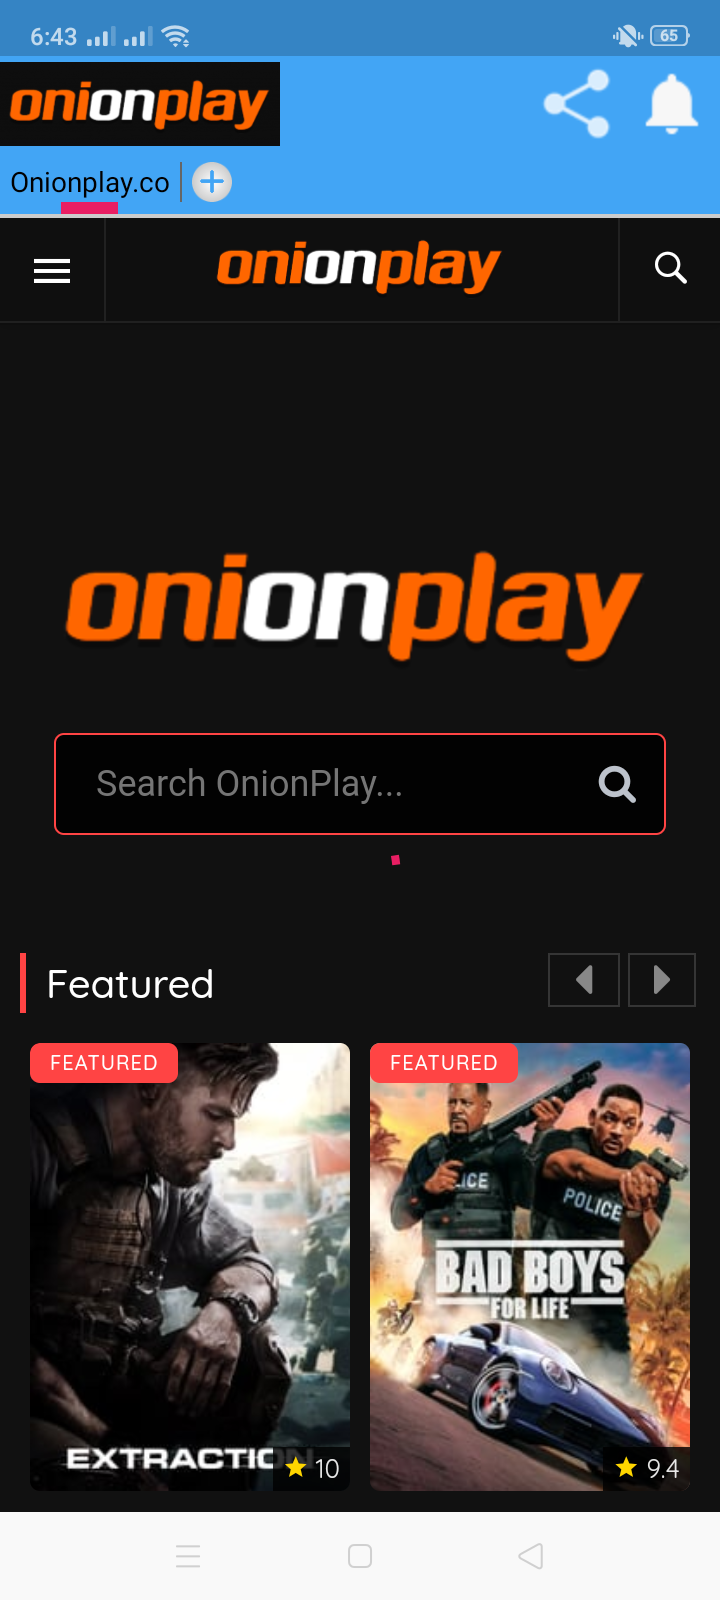 onionplay homepage